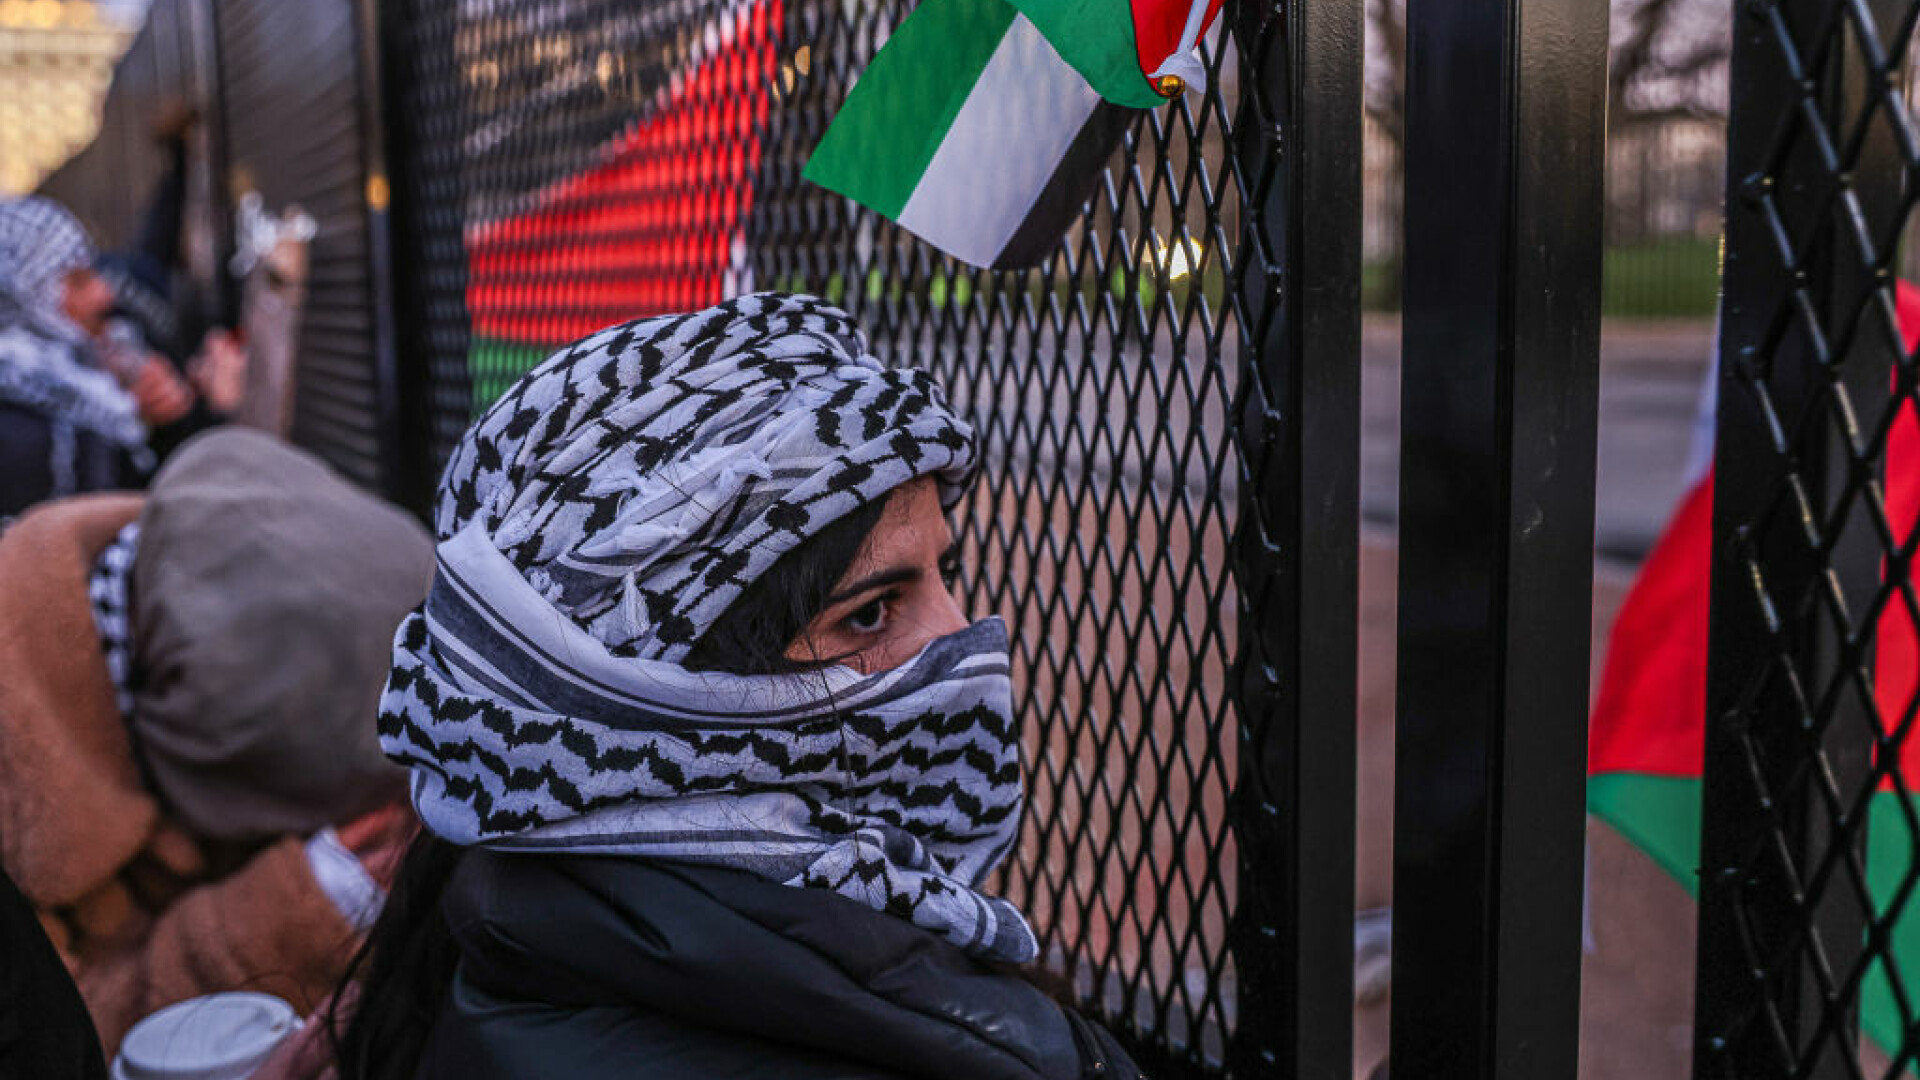 protest pro-palestina in Washington